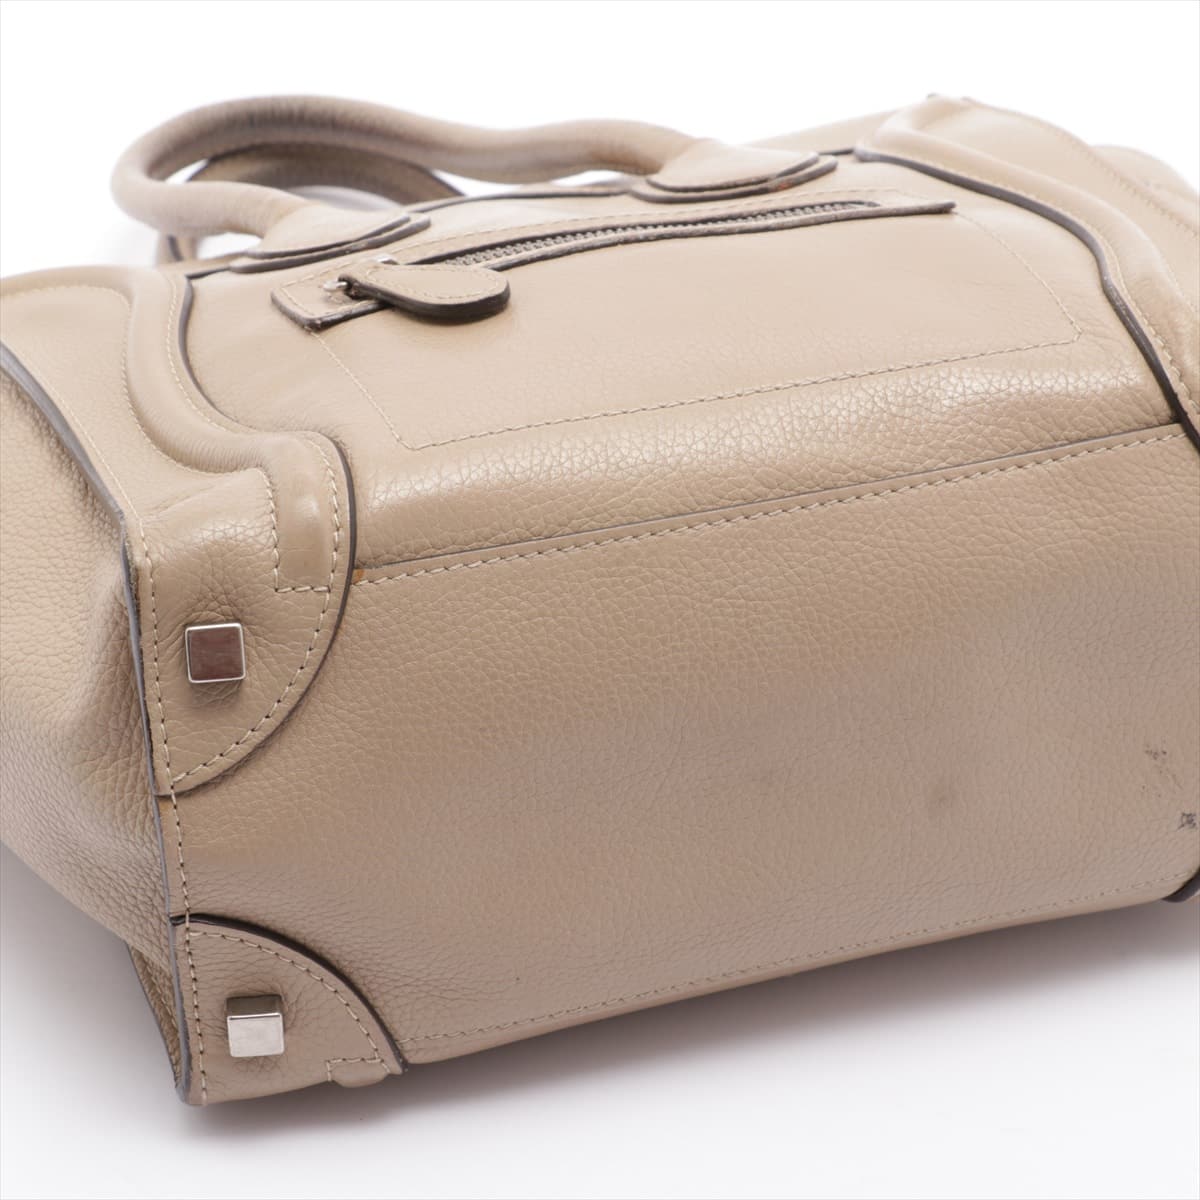 CELINE Luggage Micro Shopper Leather Tote bag Beige